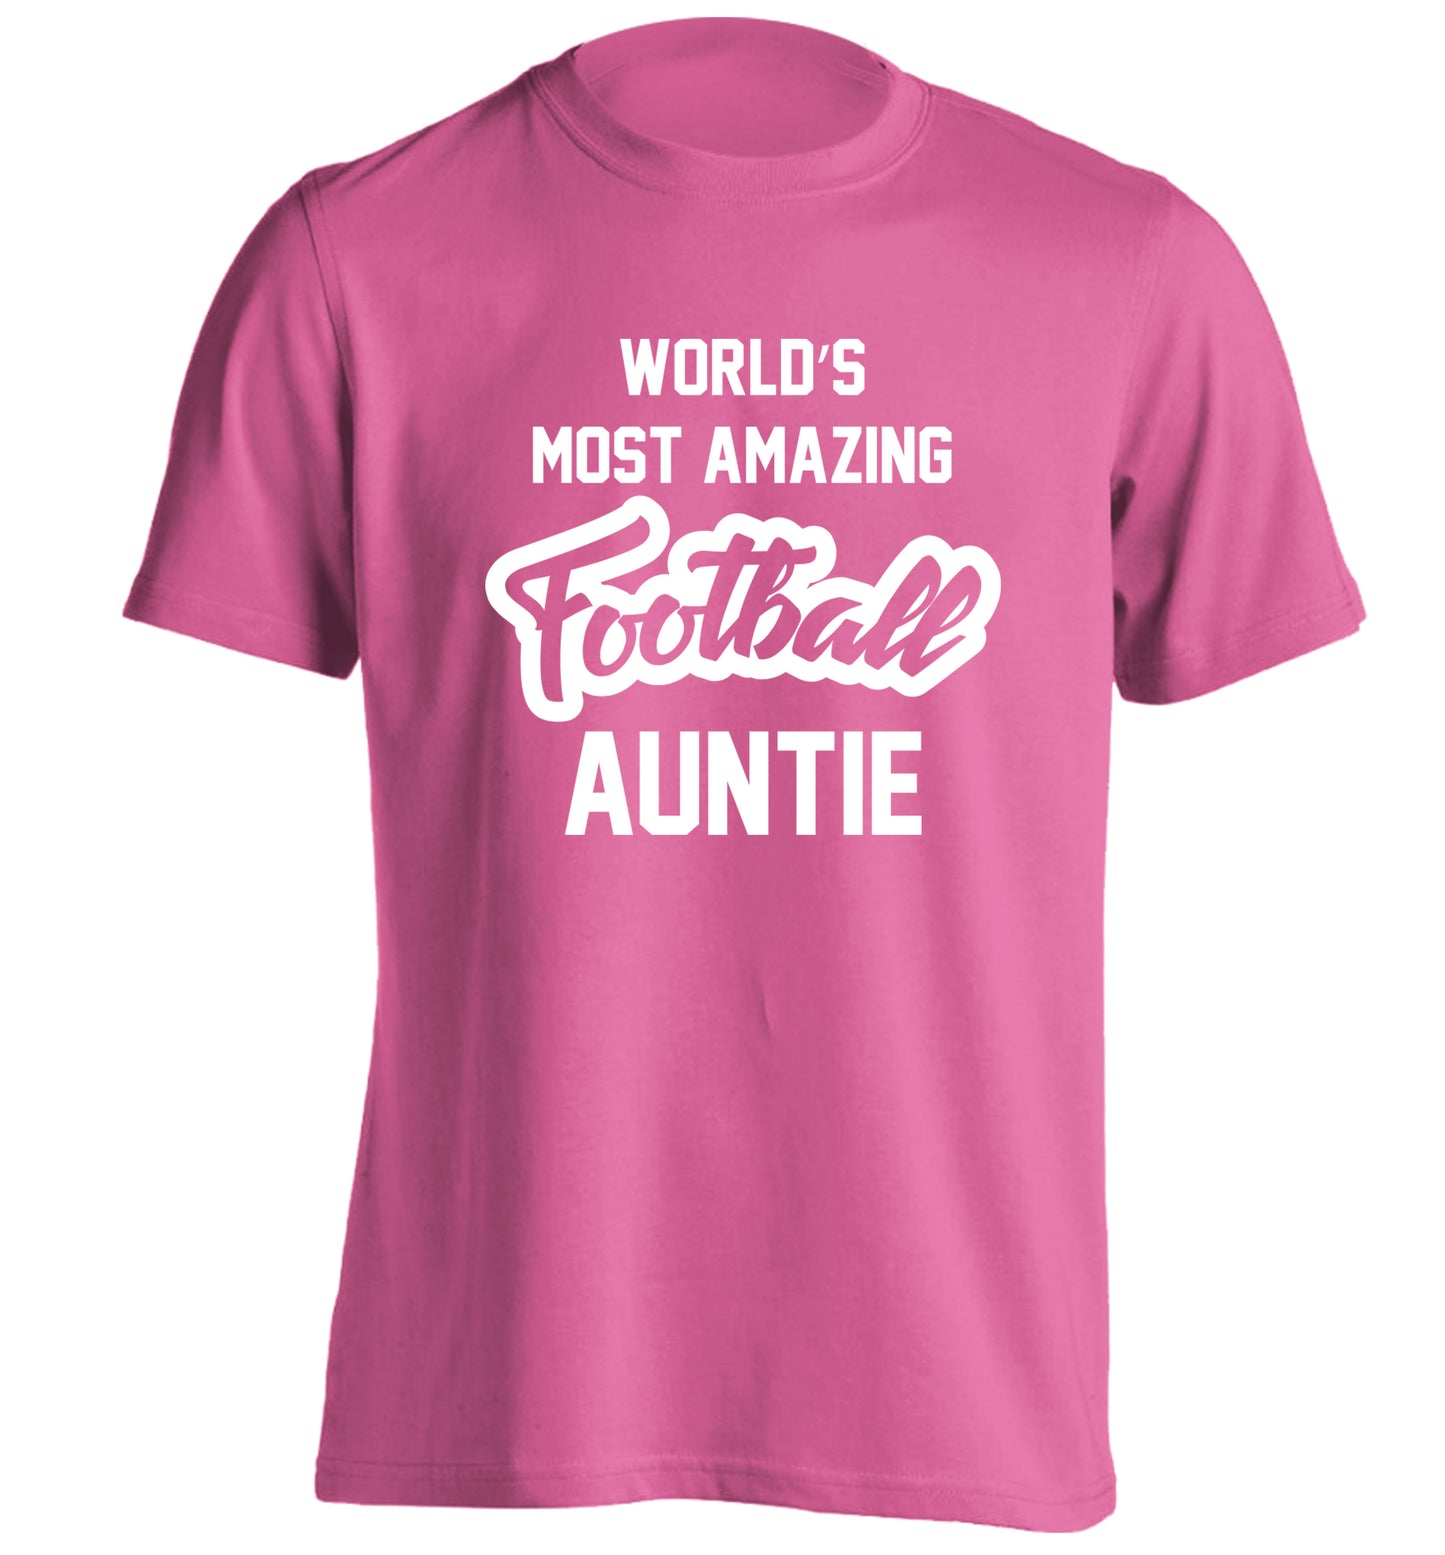 Worlds most amazing football auntie adults unisexpink Tshirt 2XL